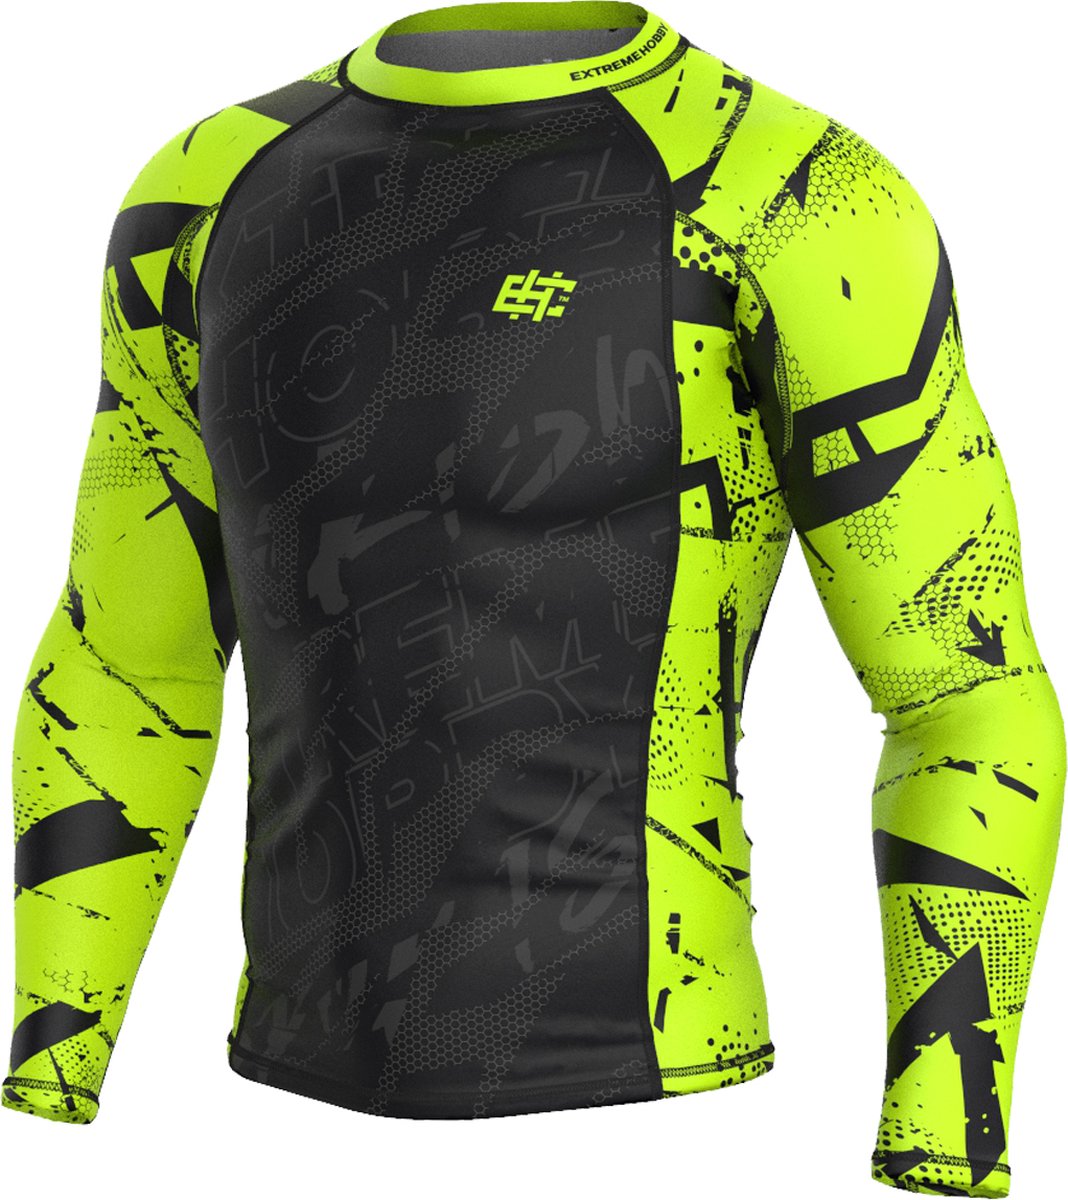 Extreme Hobby - Neo Lime - Rashguard Long Sleeve - Compression Shirt - Zwaart, Lime - Maat XXL